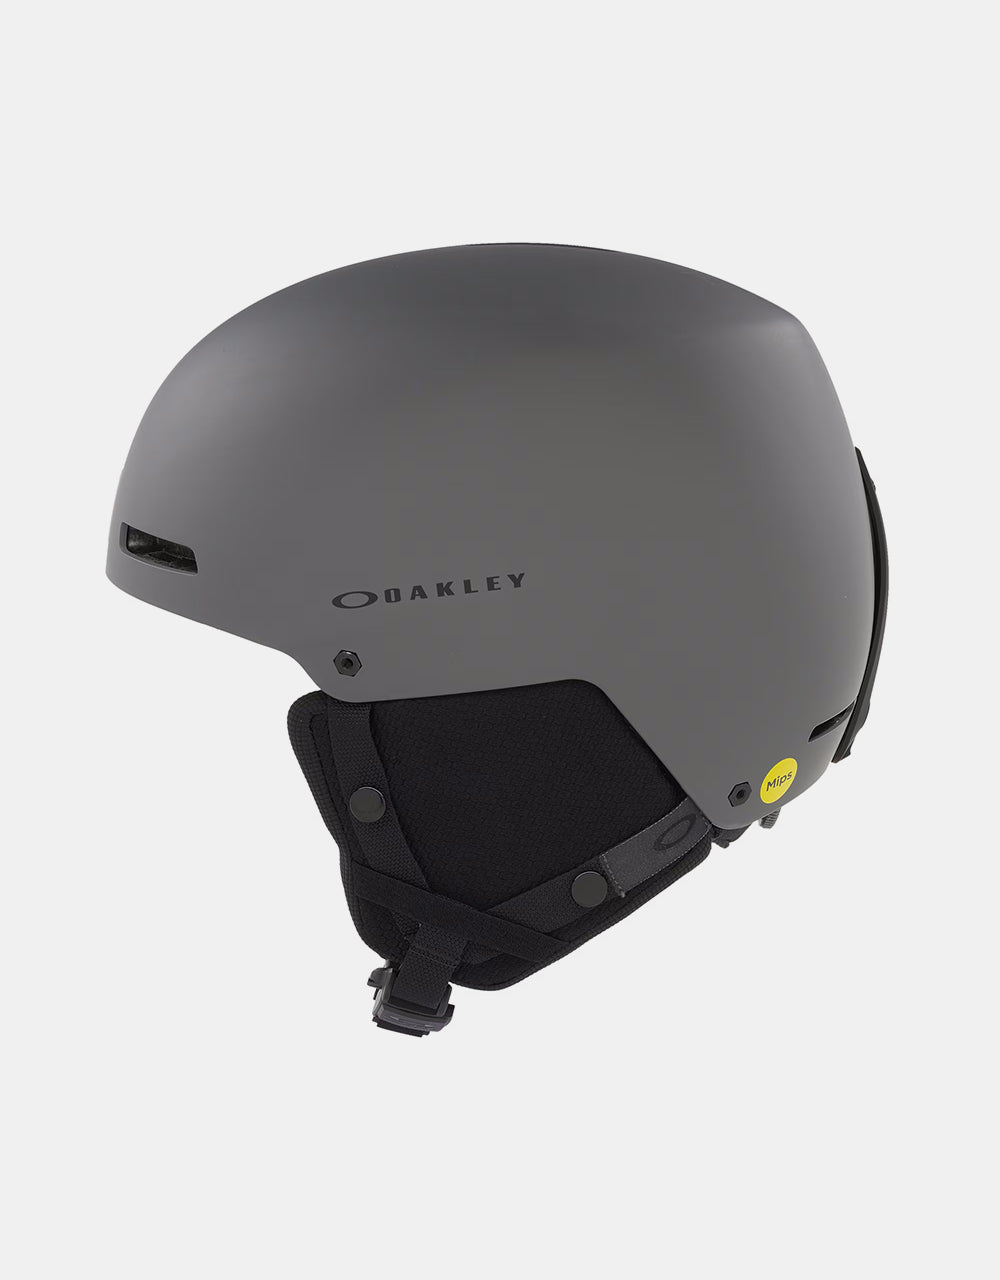 Oakley MOD1 PRO Snowboard Helmet - Forged Iron